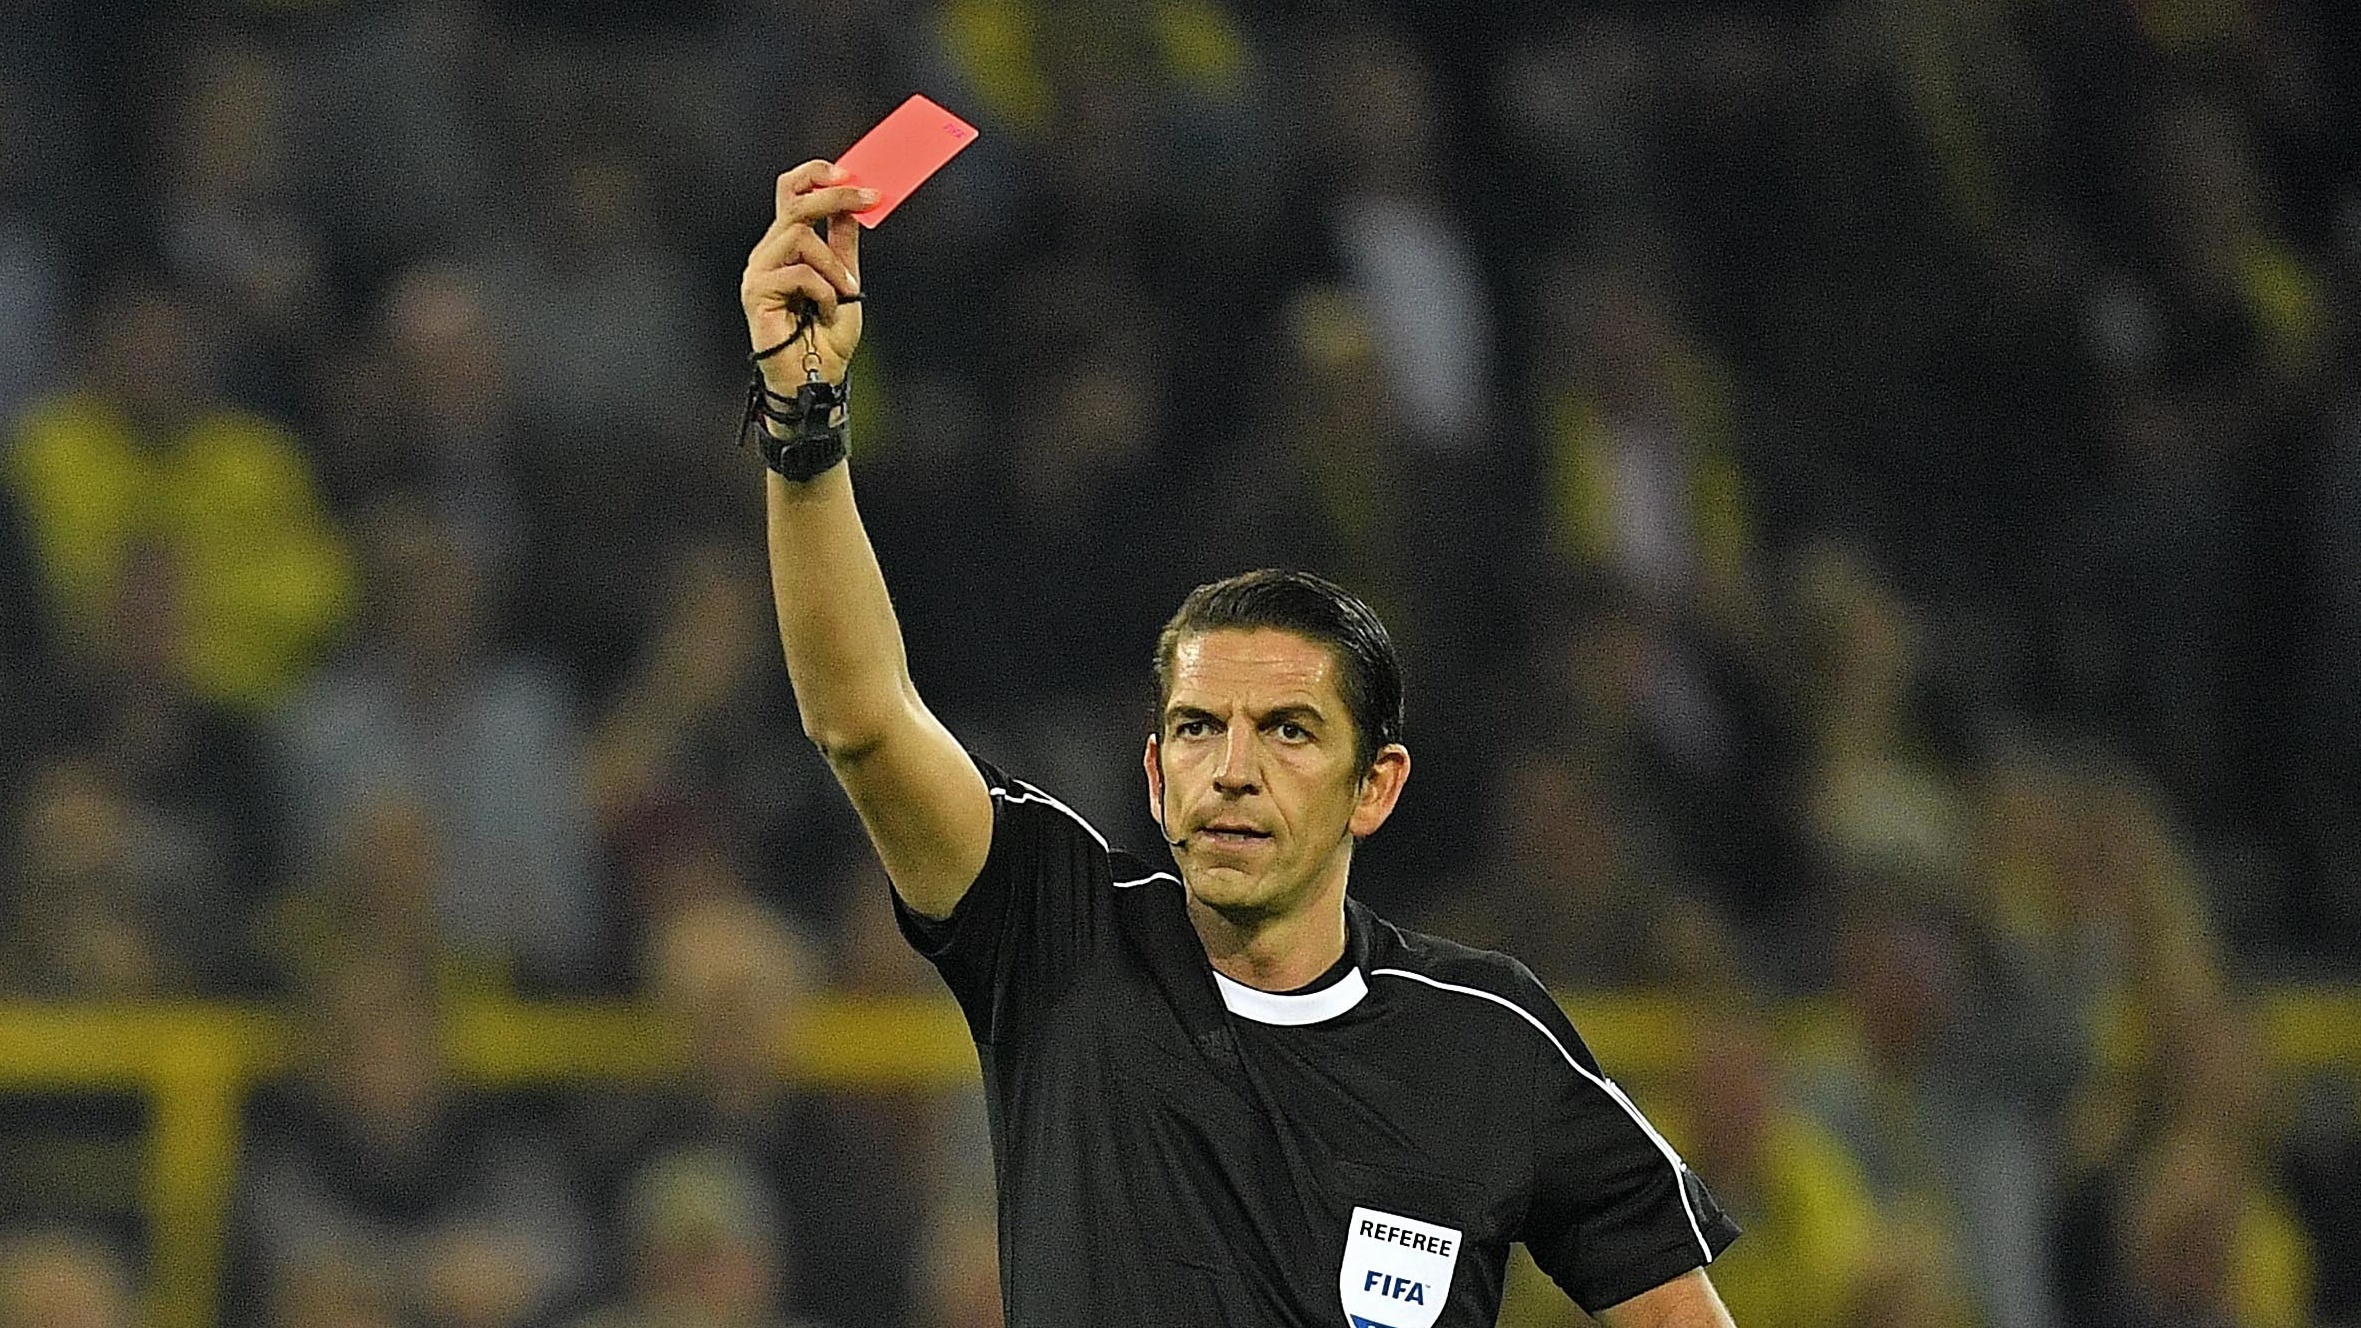 Referee Deniz Aytekin shows a red card during a Bundesliga game